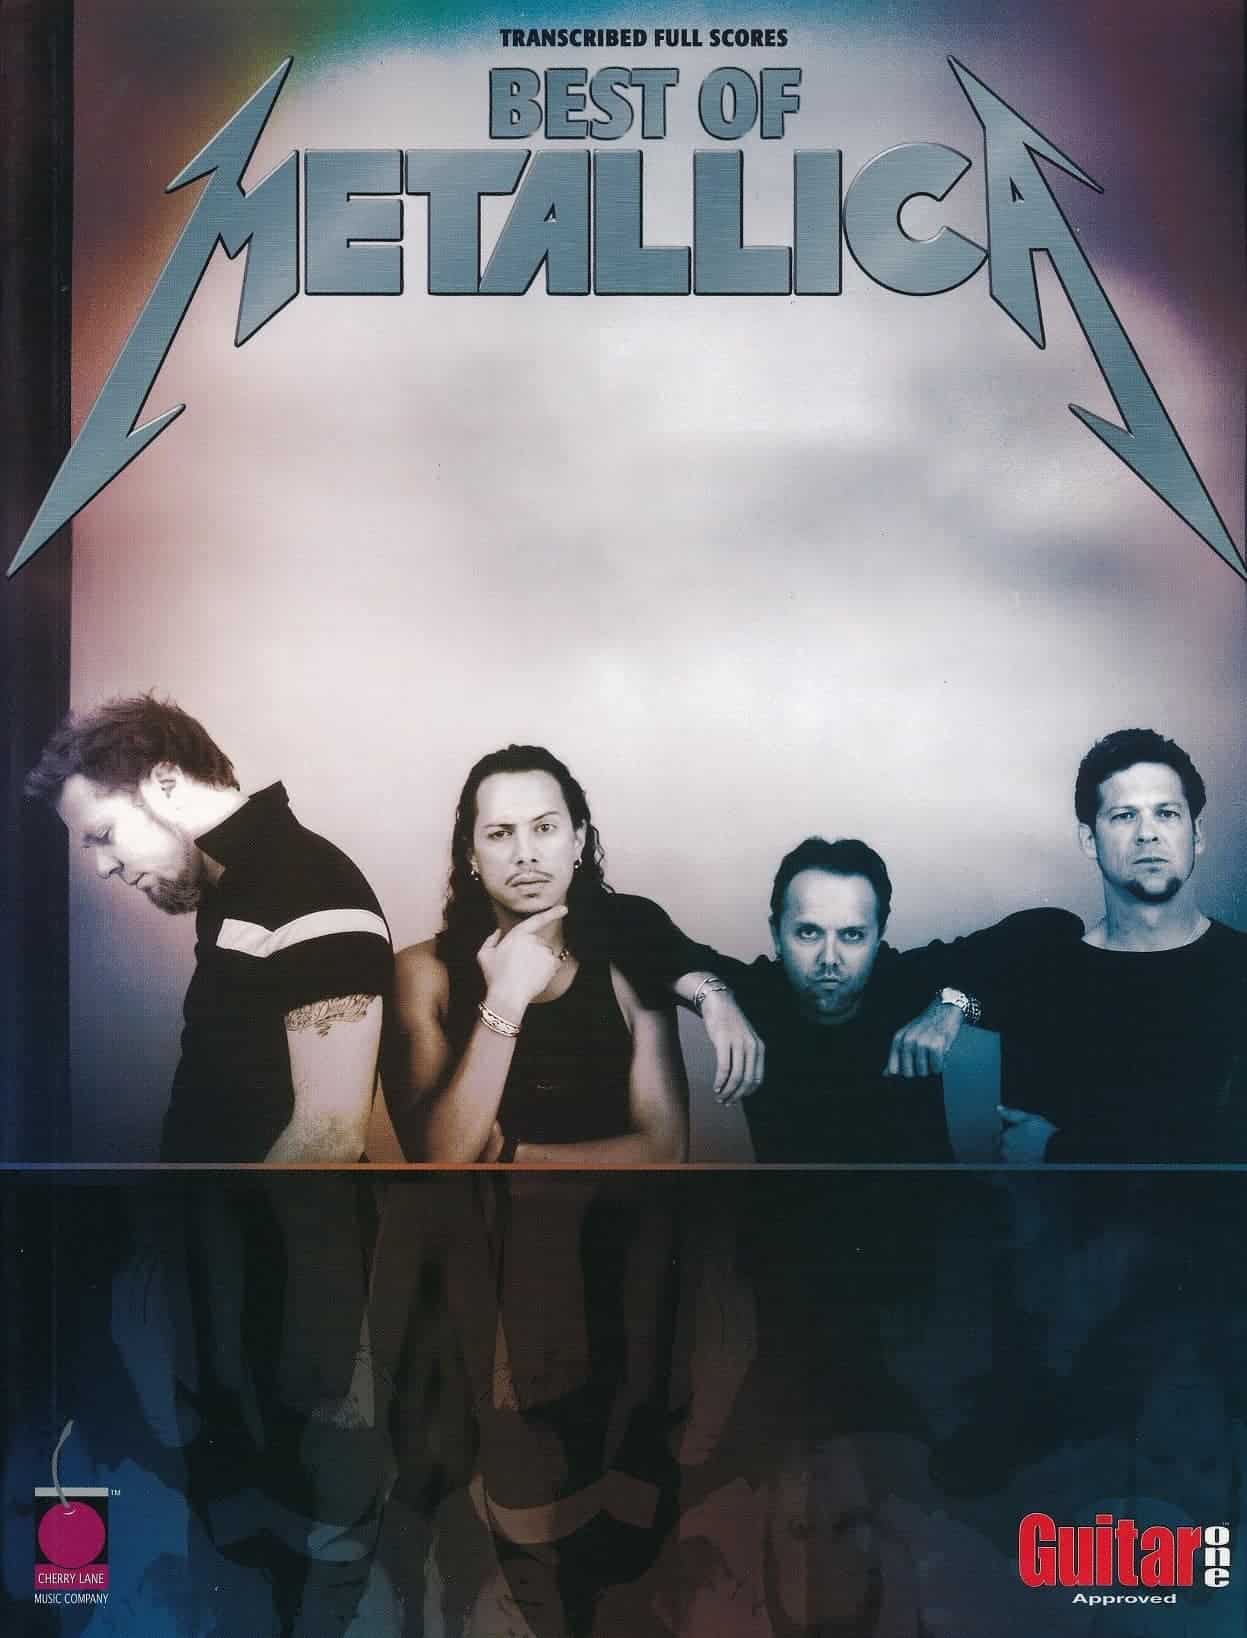 Best Of Metallica, Transcribed Full Scores